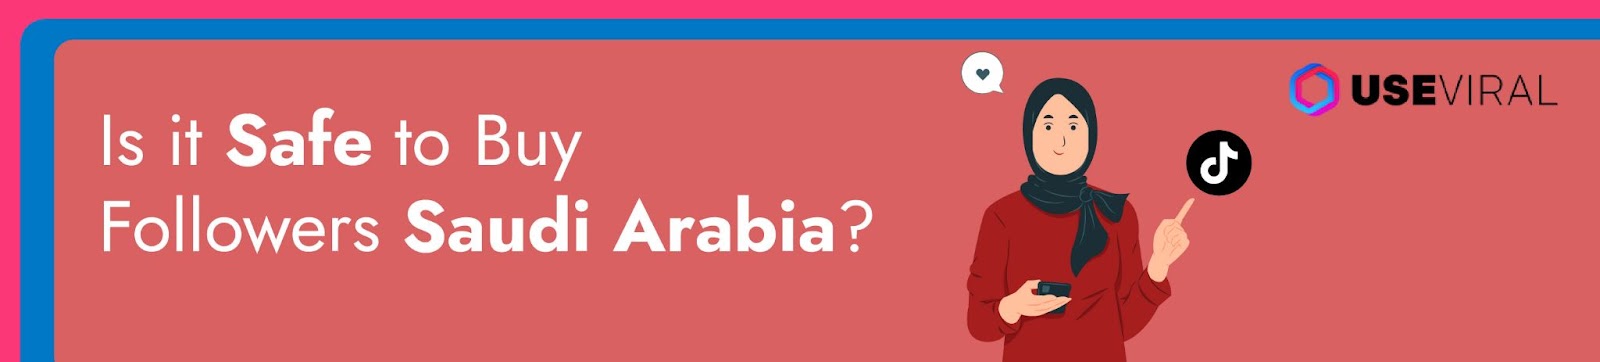 Is it Safe to Buy Followers Saudi Arabia?